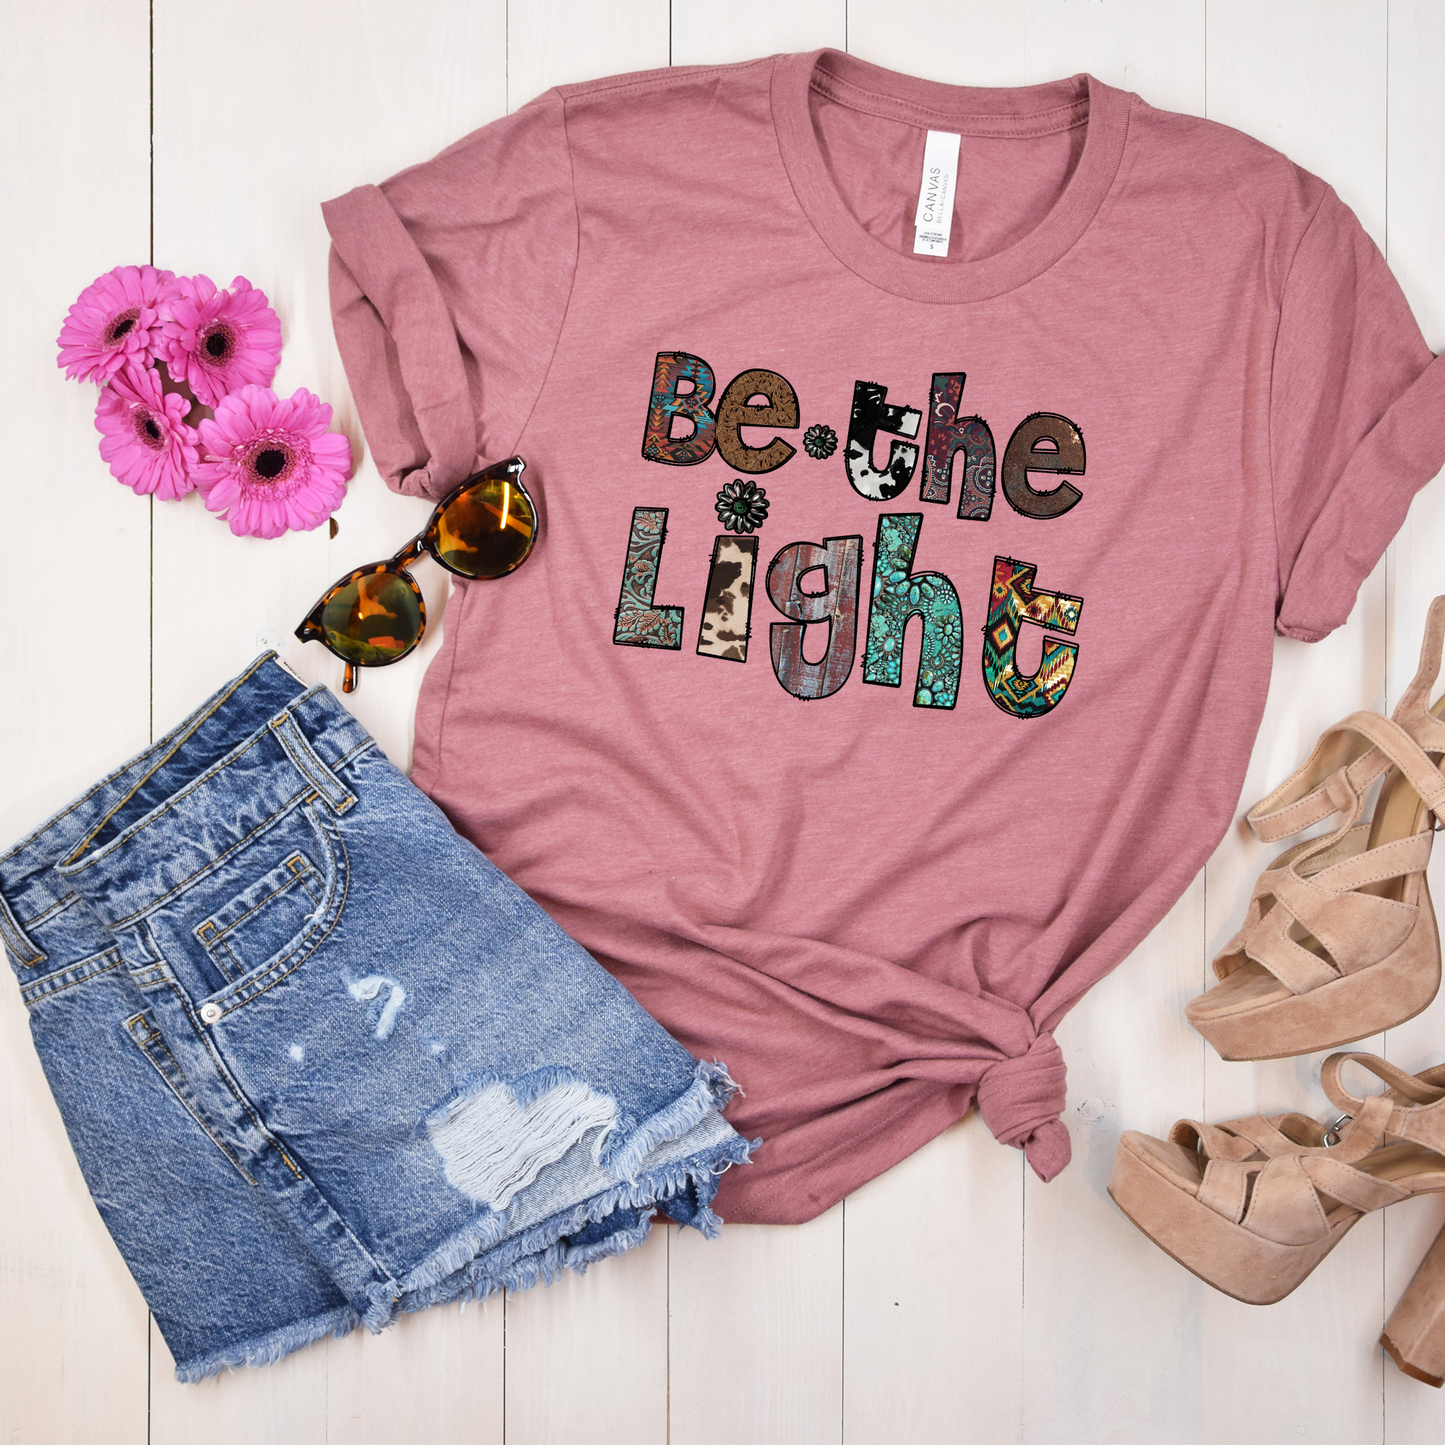 Be The Light Christian T-Shirt